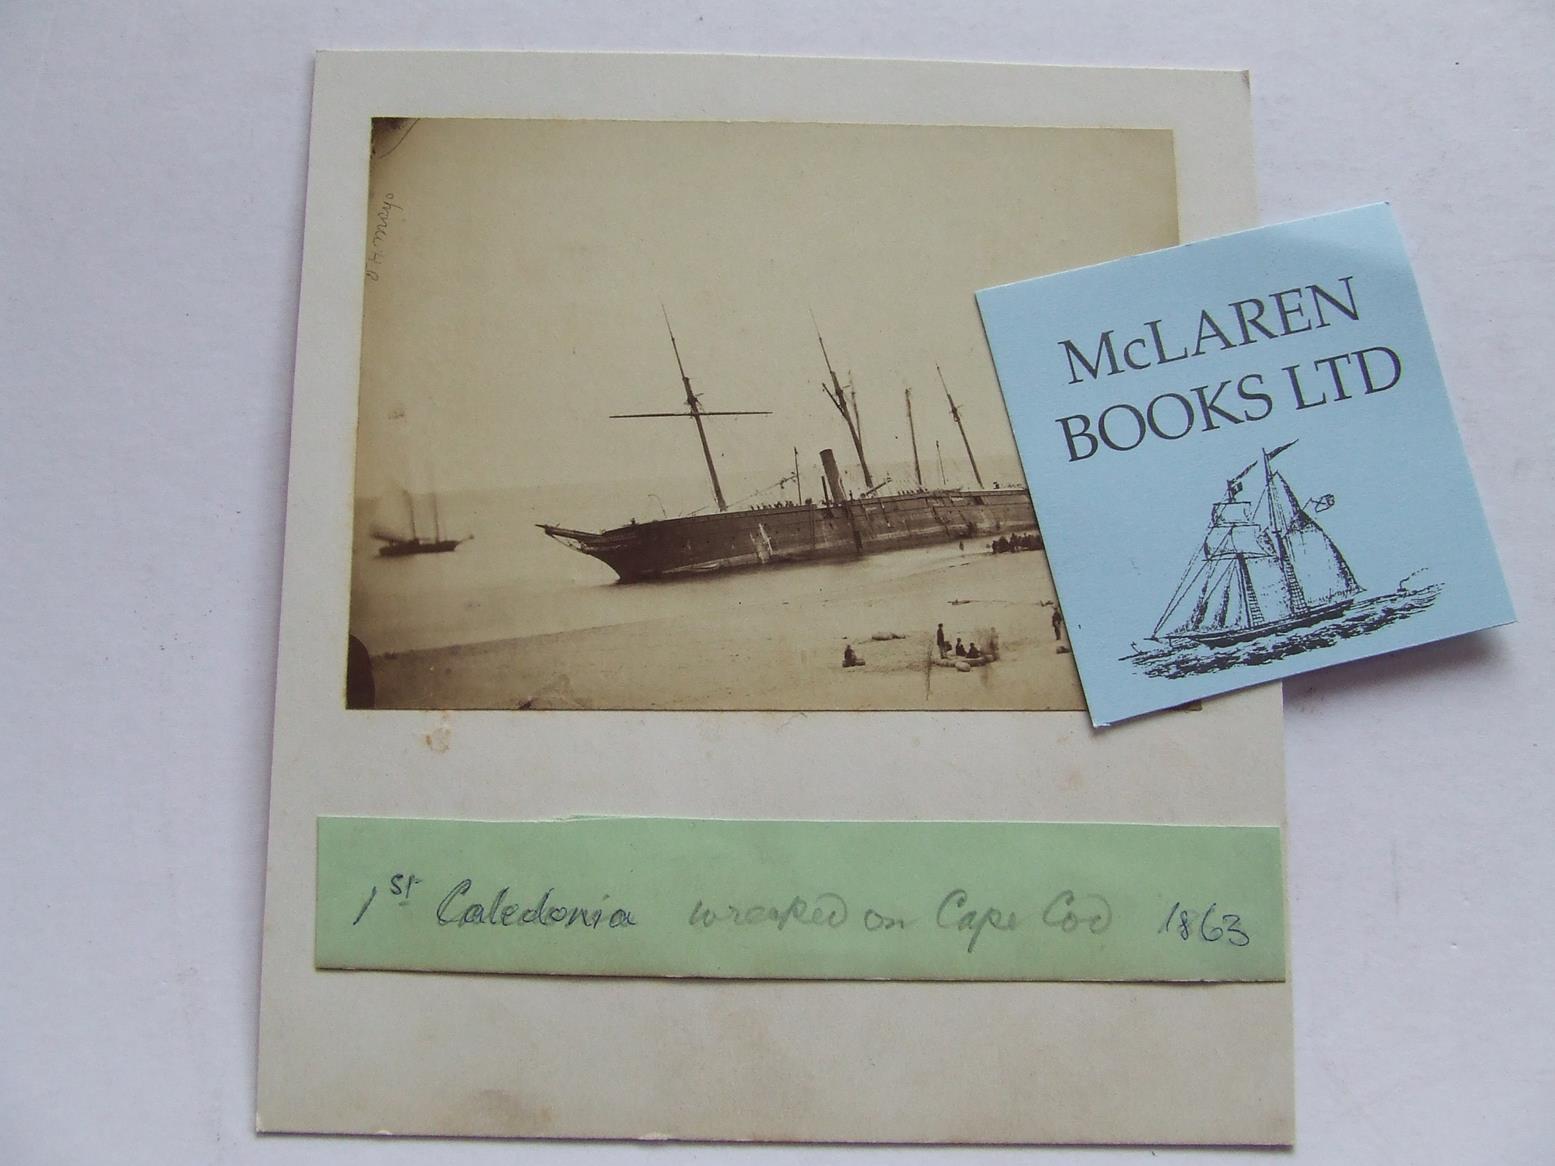 1st Caledonia wrecked on Cape Cod 1863 - albumen print